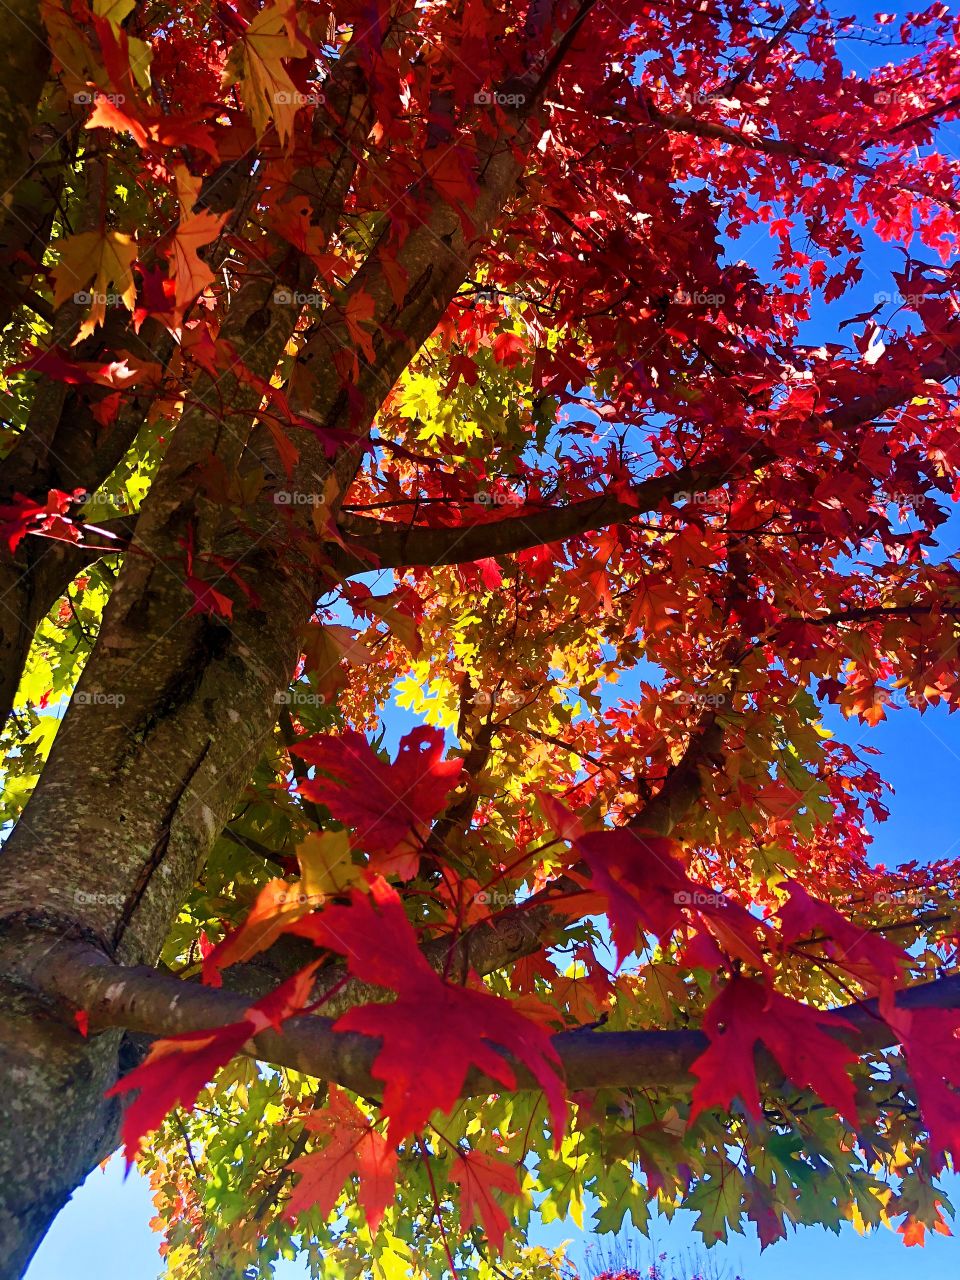 Vibrant autumn foliage from a Virginia October